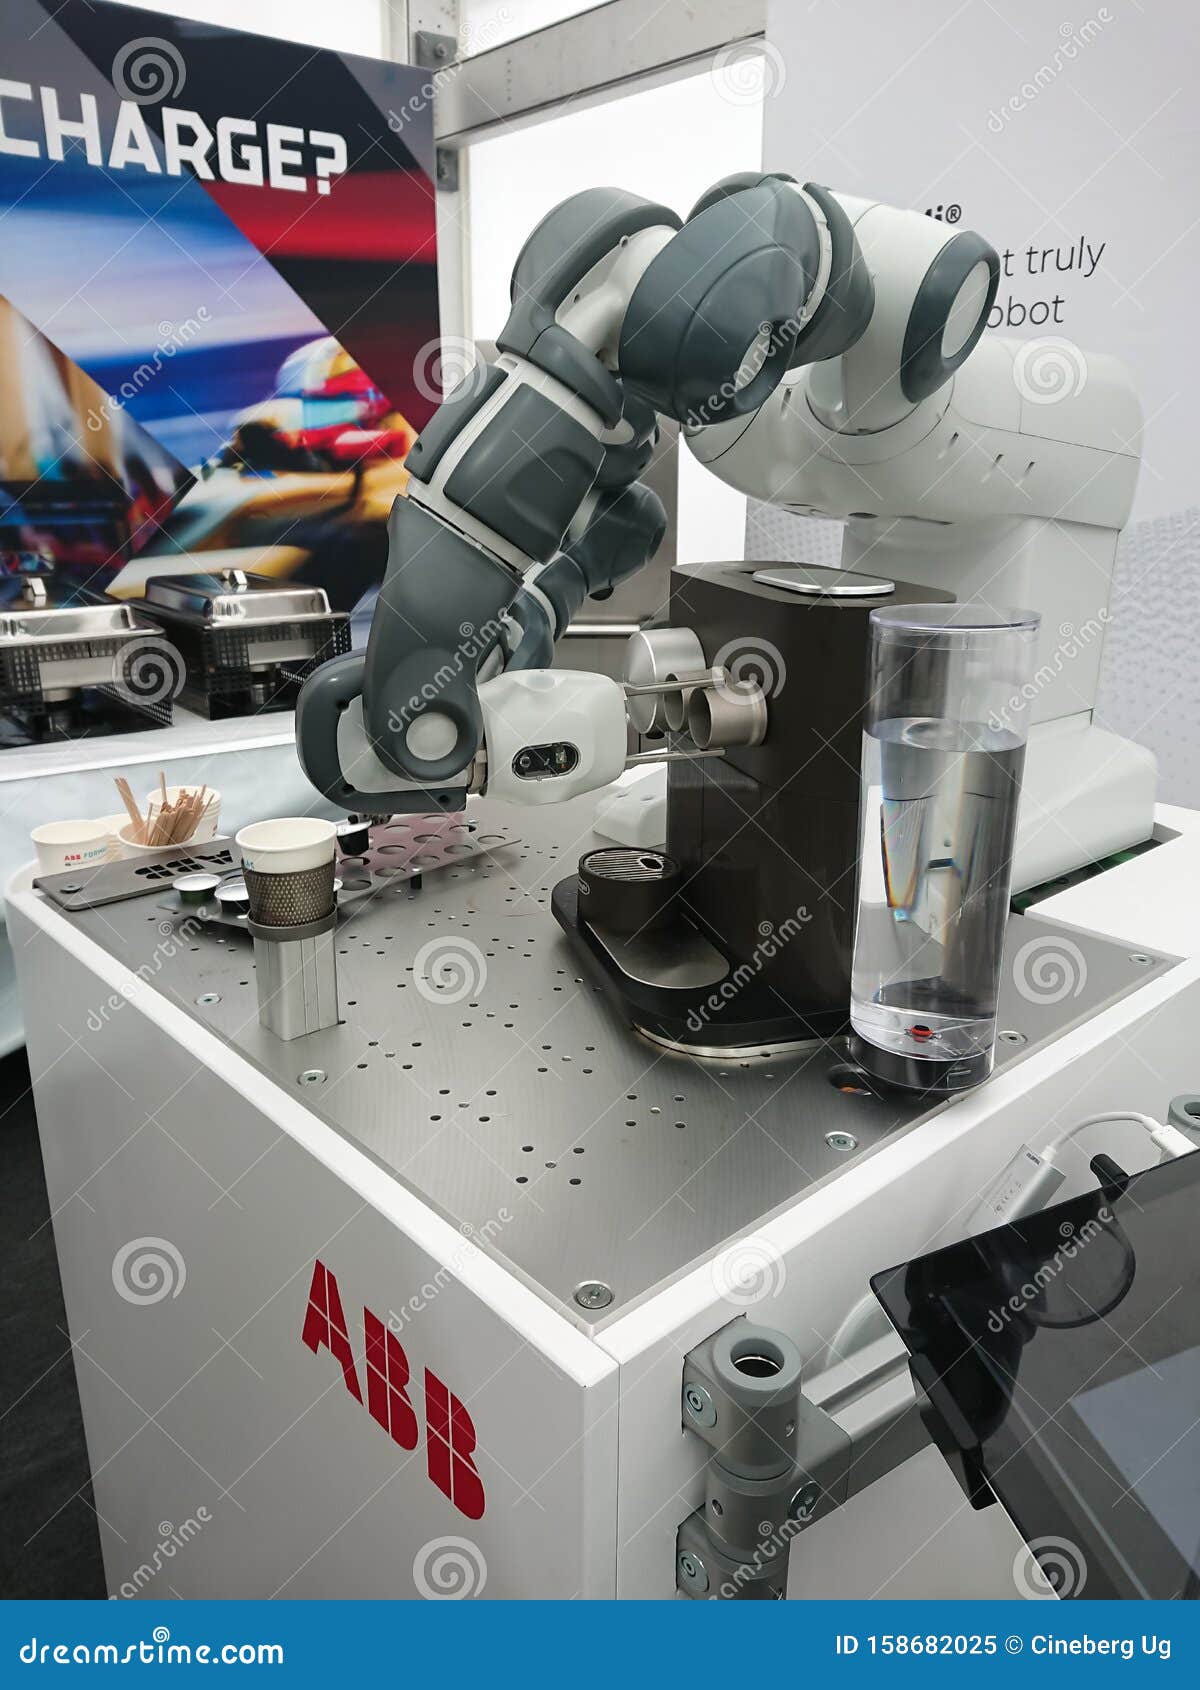 Abb robot editorial image. of cappuccino - 158682025